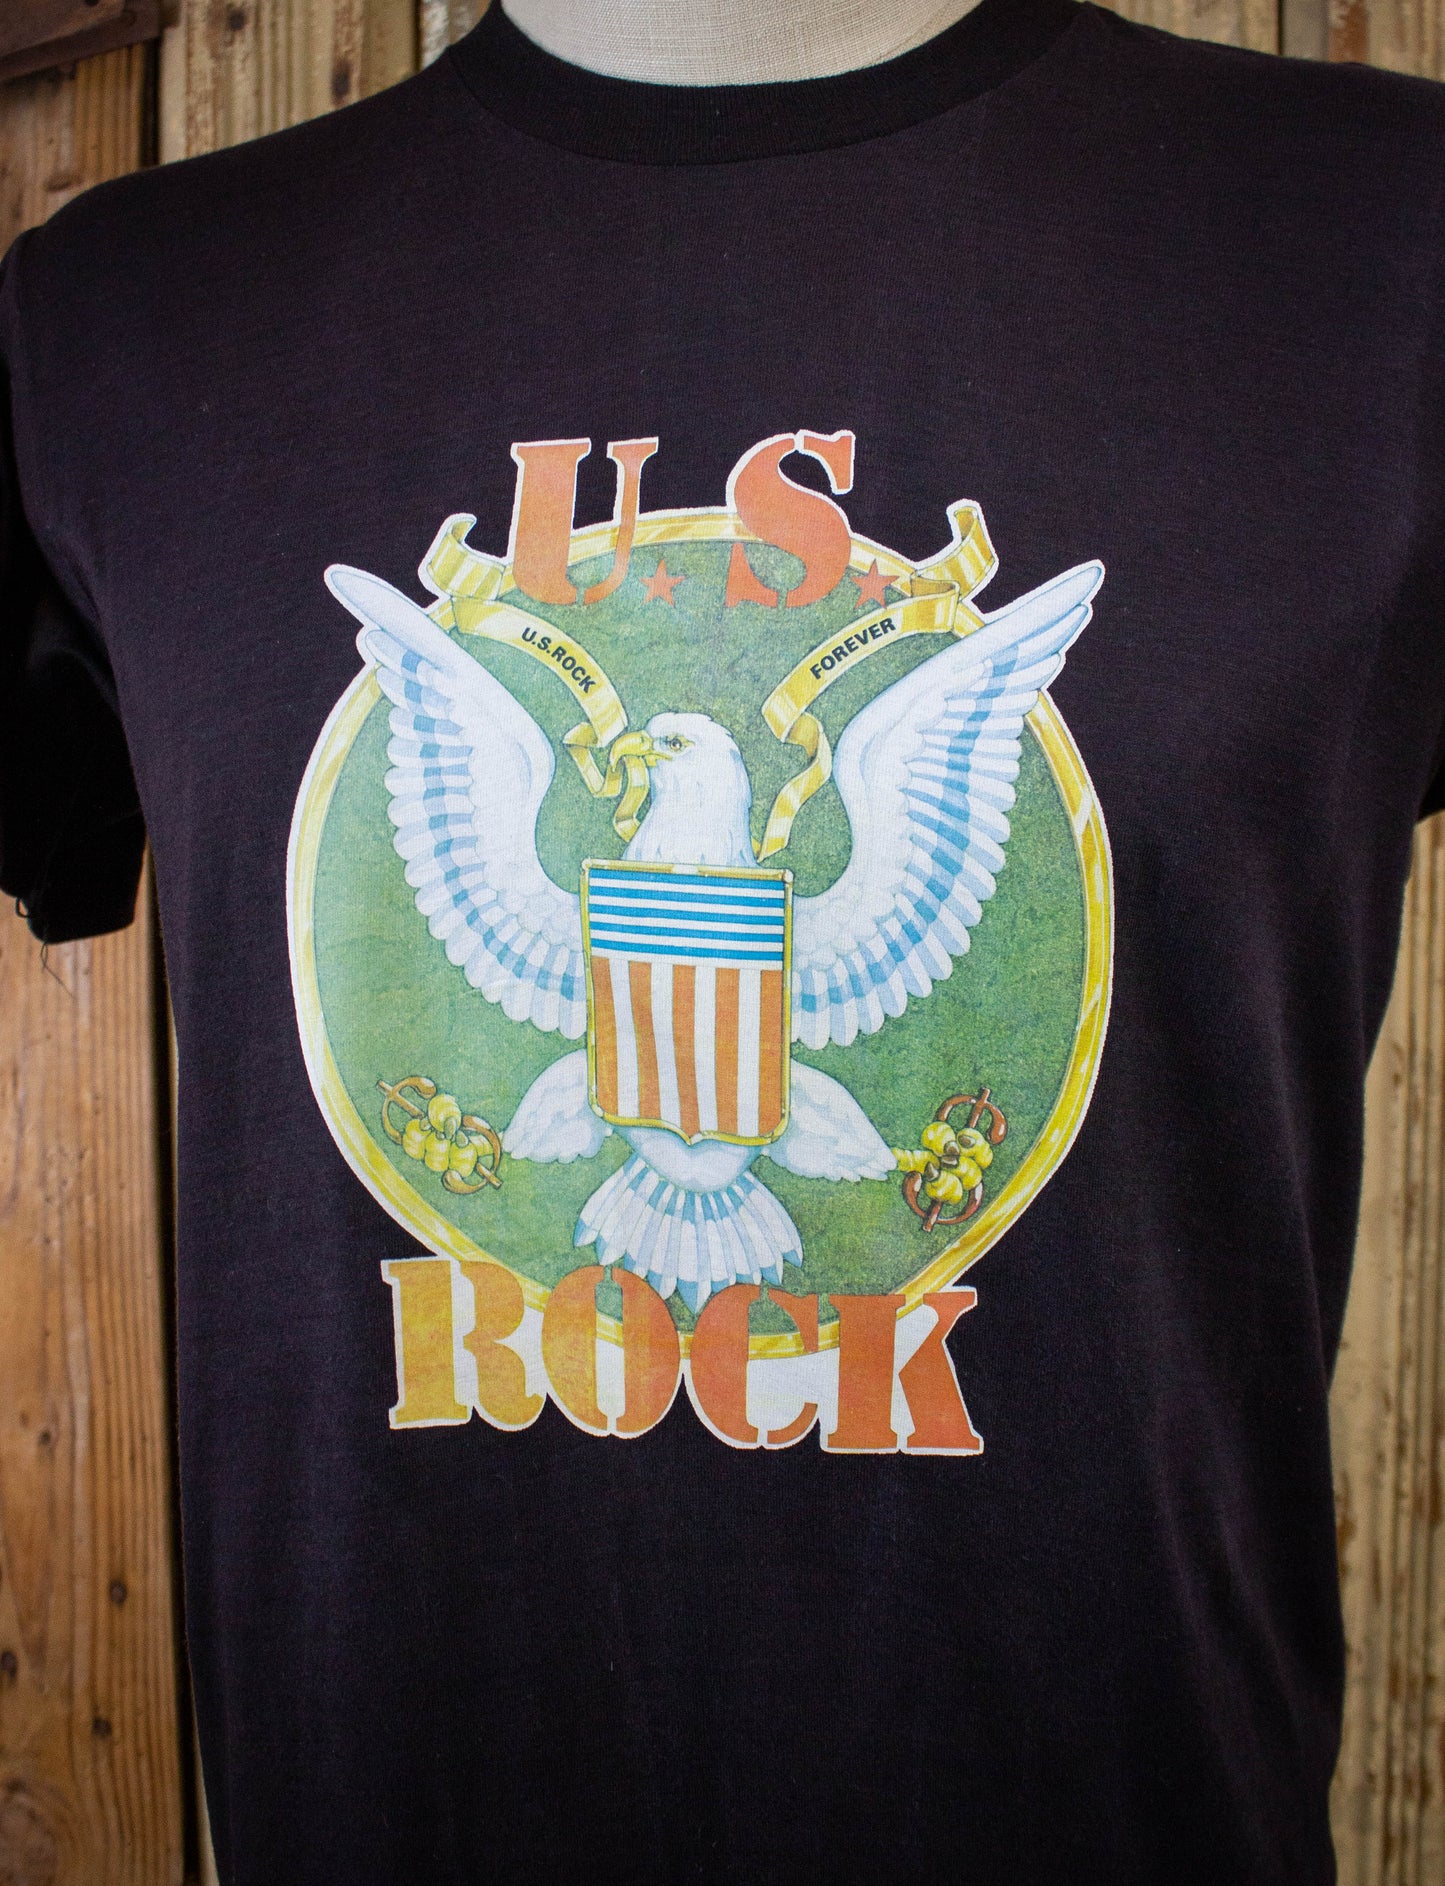 Vintage US Rock Iron On Graphic T Shirt 70s Black Large